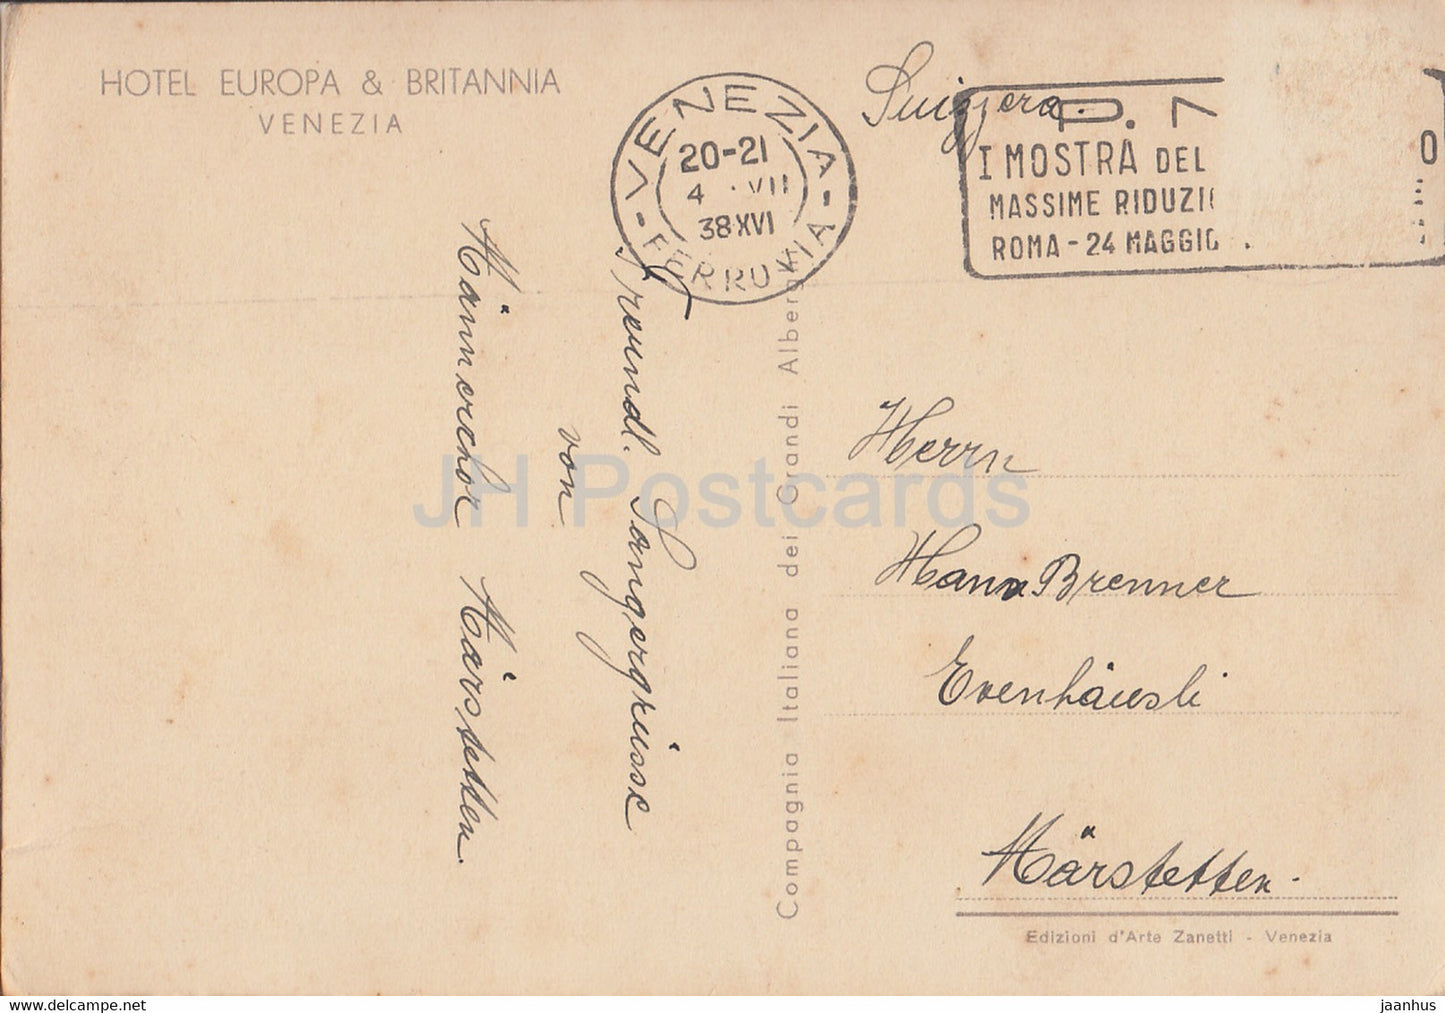 Venezia - Venise - Hôtel Europa &amp; Britannia - carte postale ancienne - 1938 - Italie - utilisé